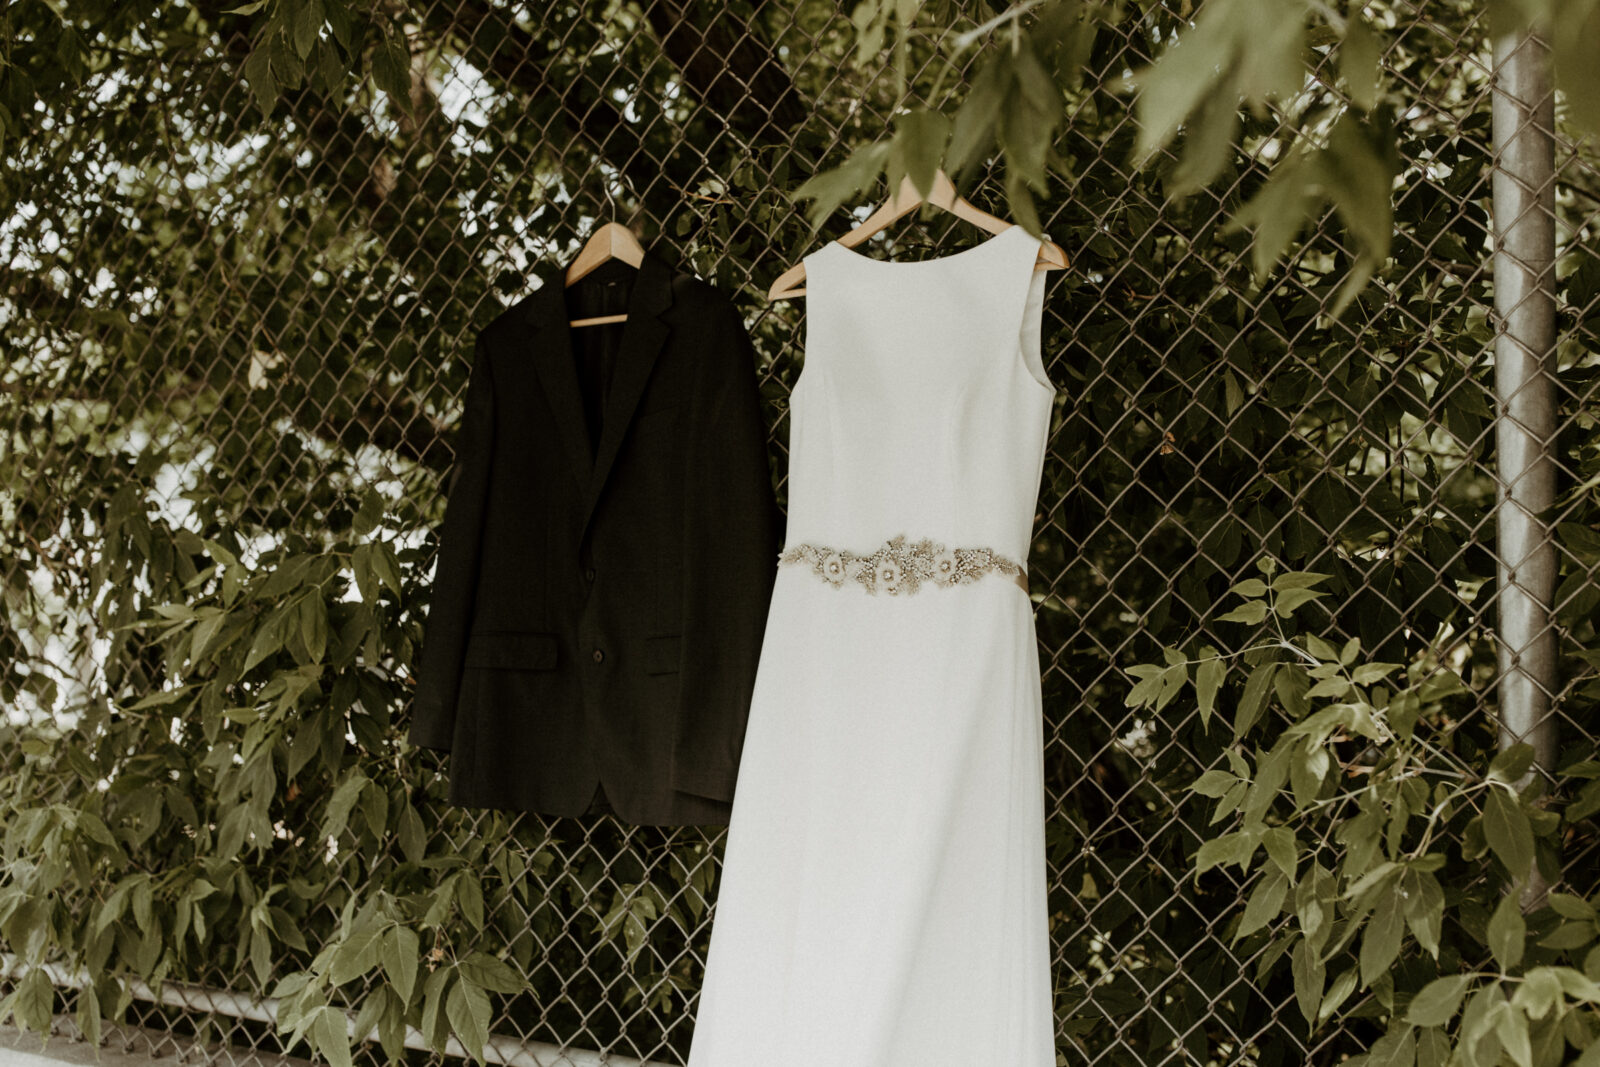 Simple and modern bride wedding dress. Modern groom wedding suit.